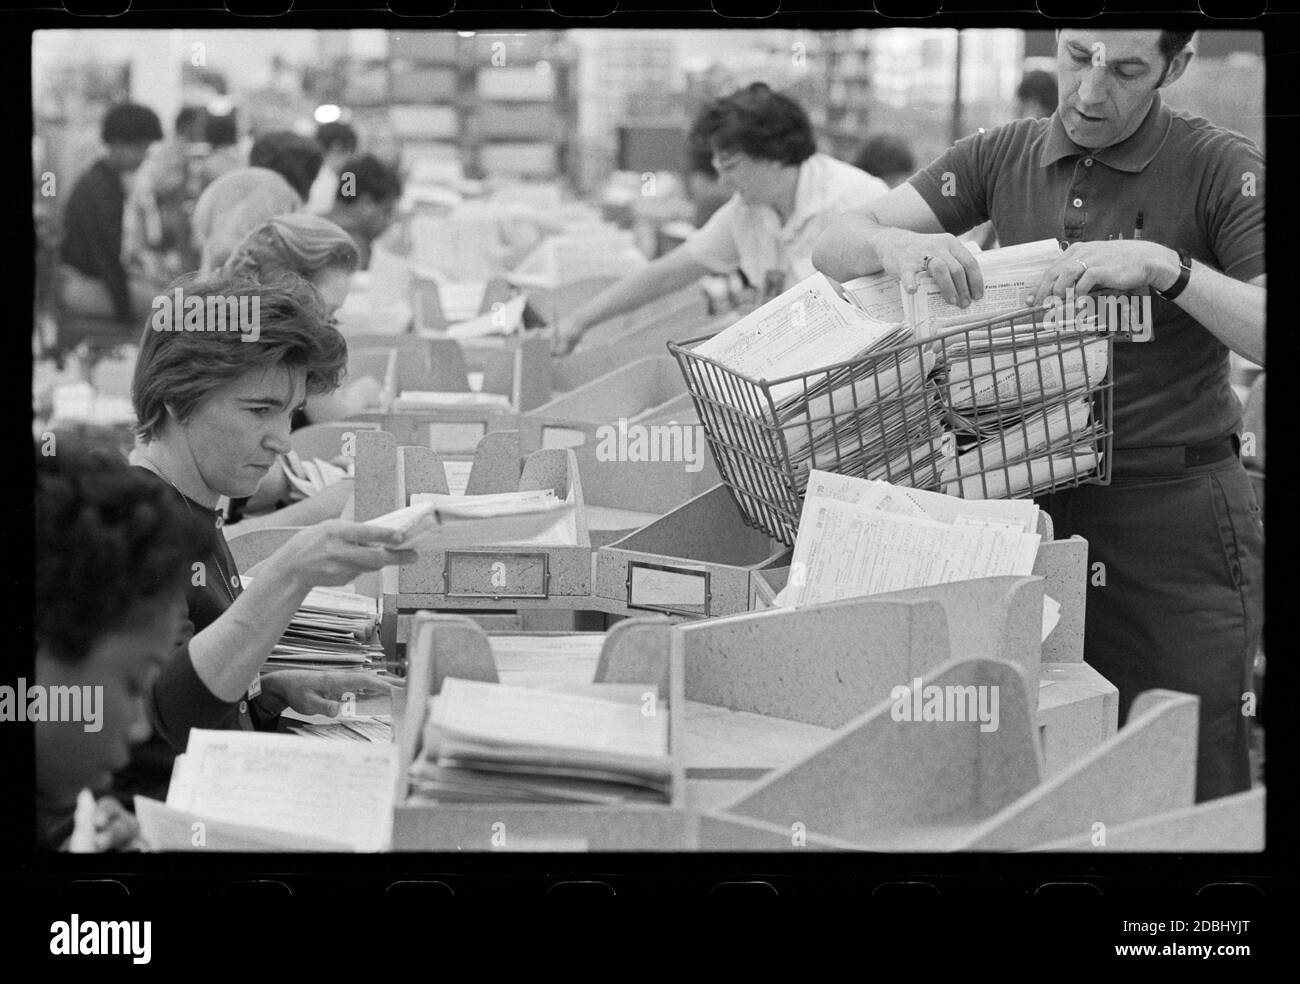 Internal Revenue Service Workers process tax returns, Philadelphia, PA, 4/14/1971. (Foto von Warren K Leffler/US News & World Report Collection/RBM Vintage Images) Stockfoto